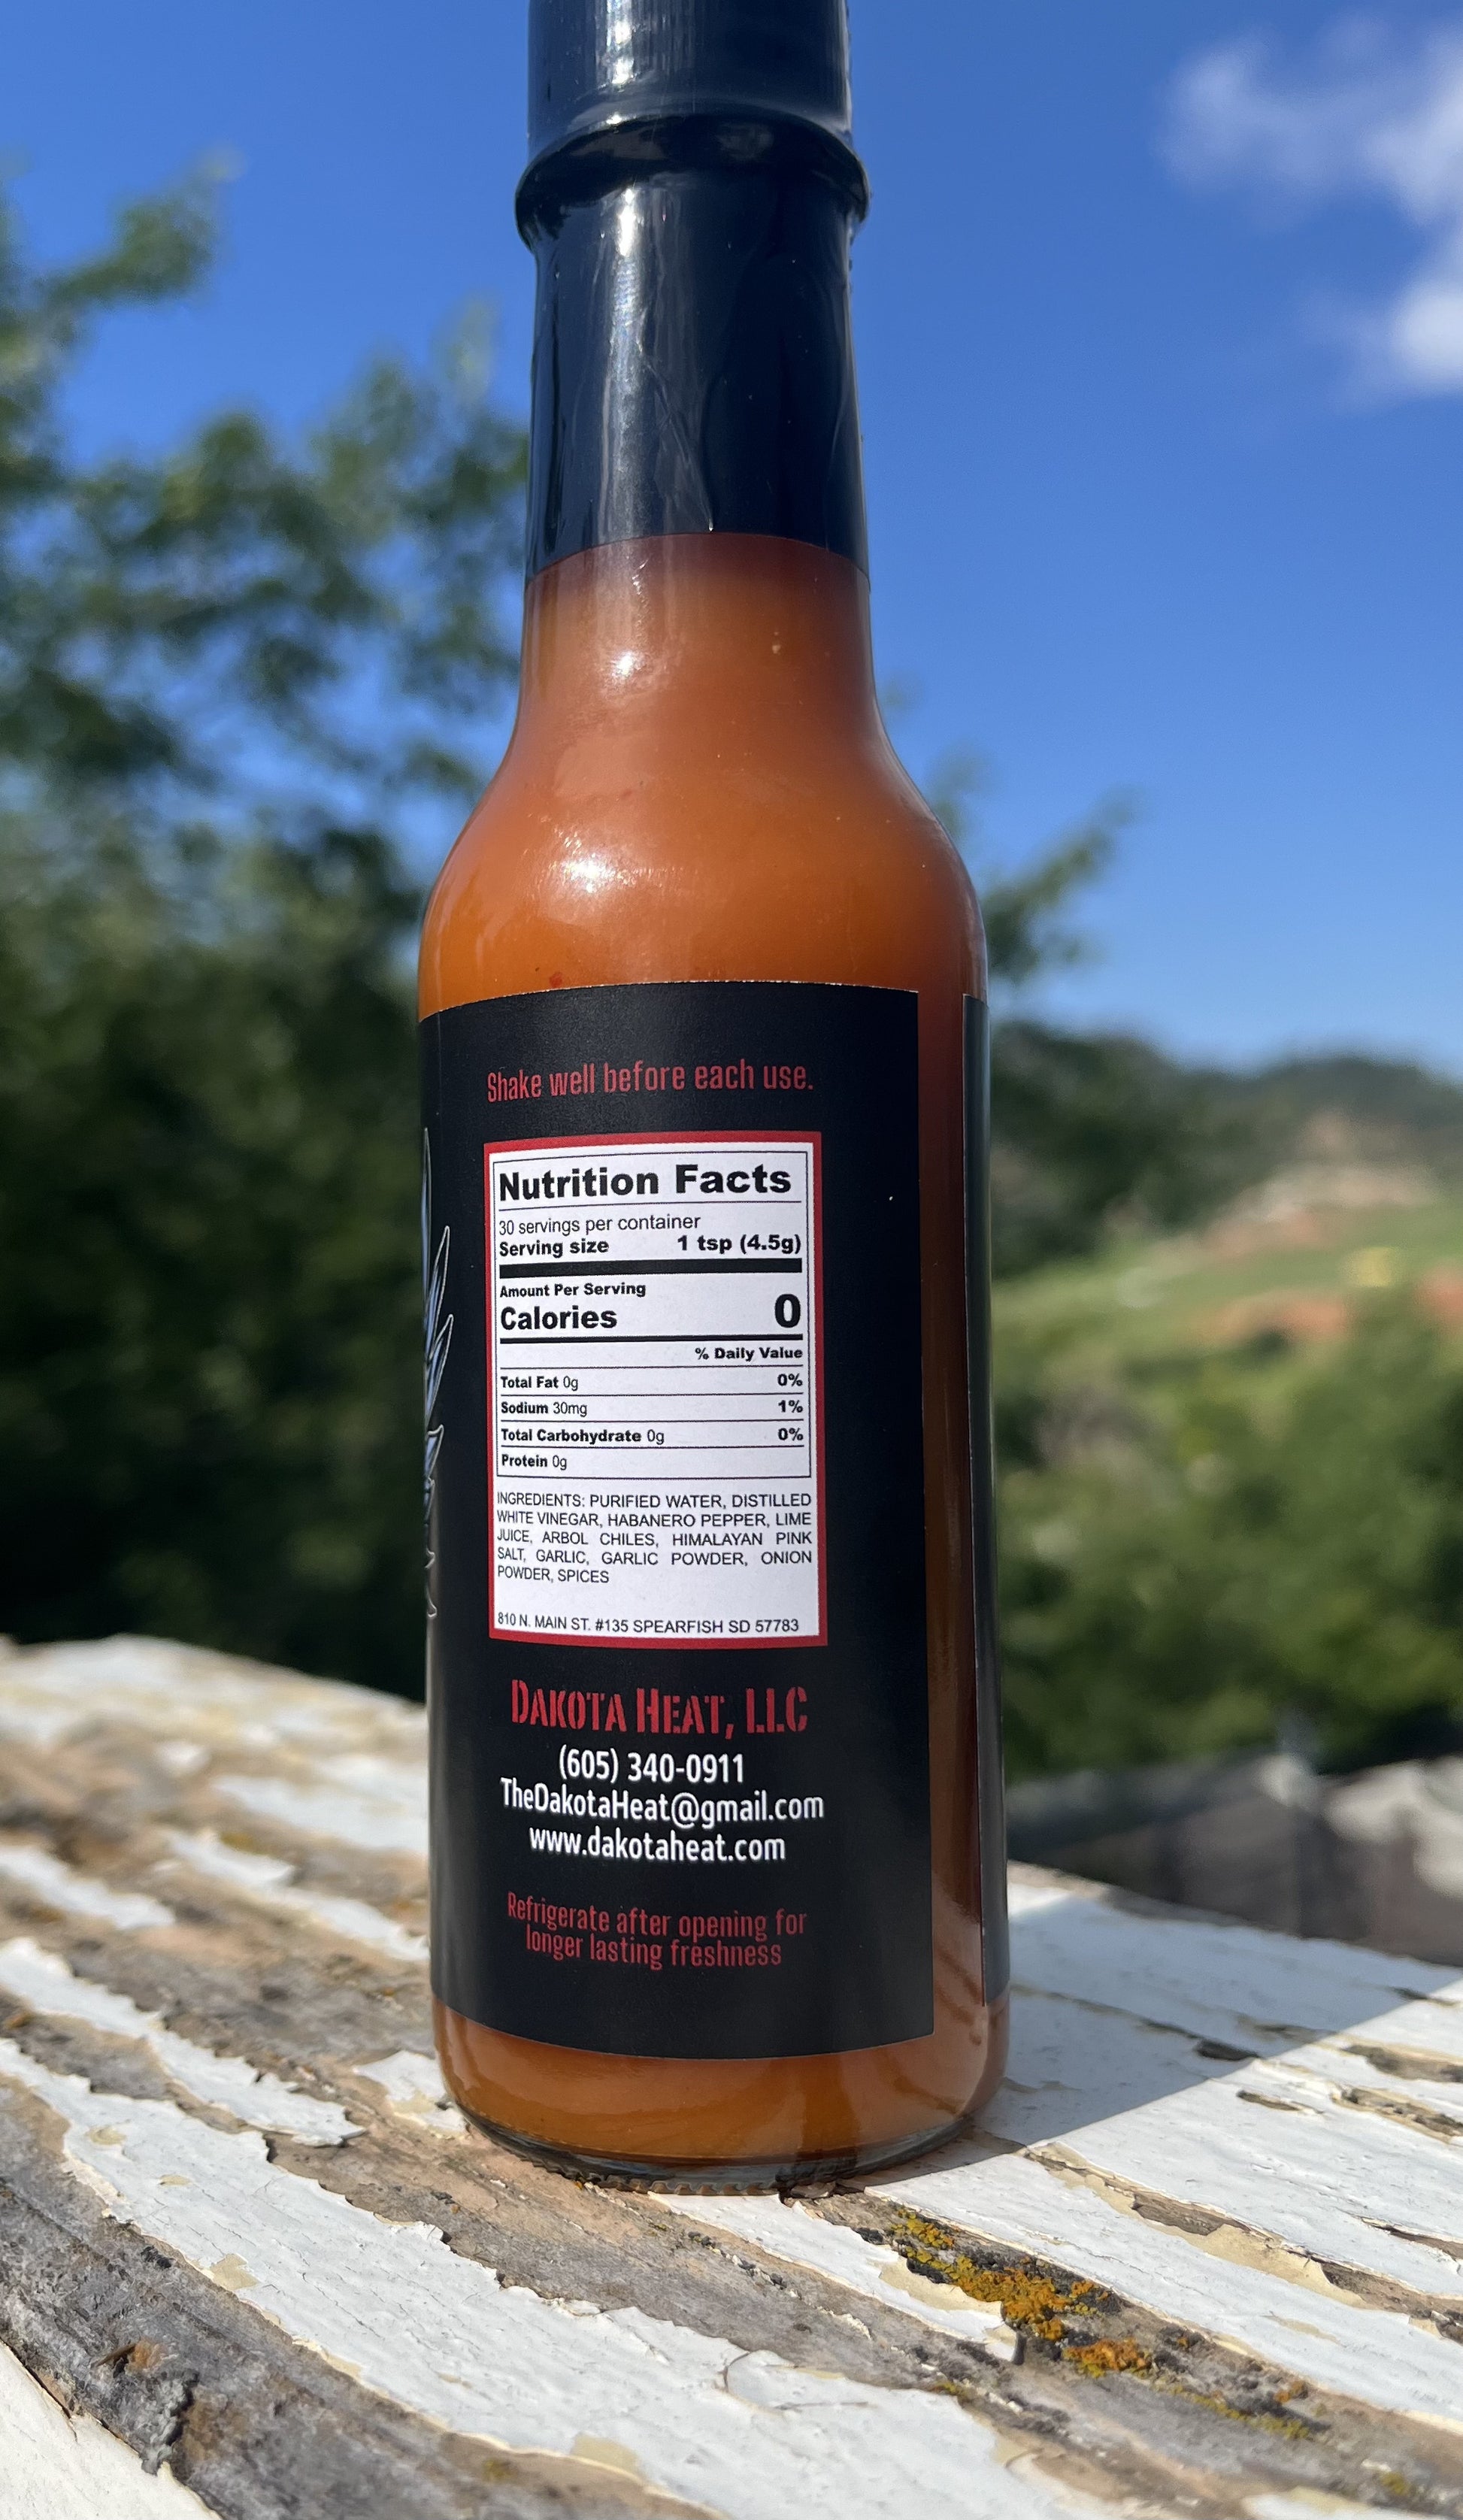 LLC - Hot Sauce, Private Label